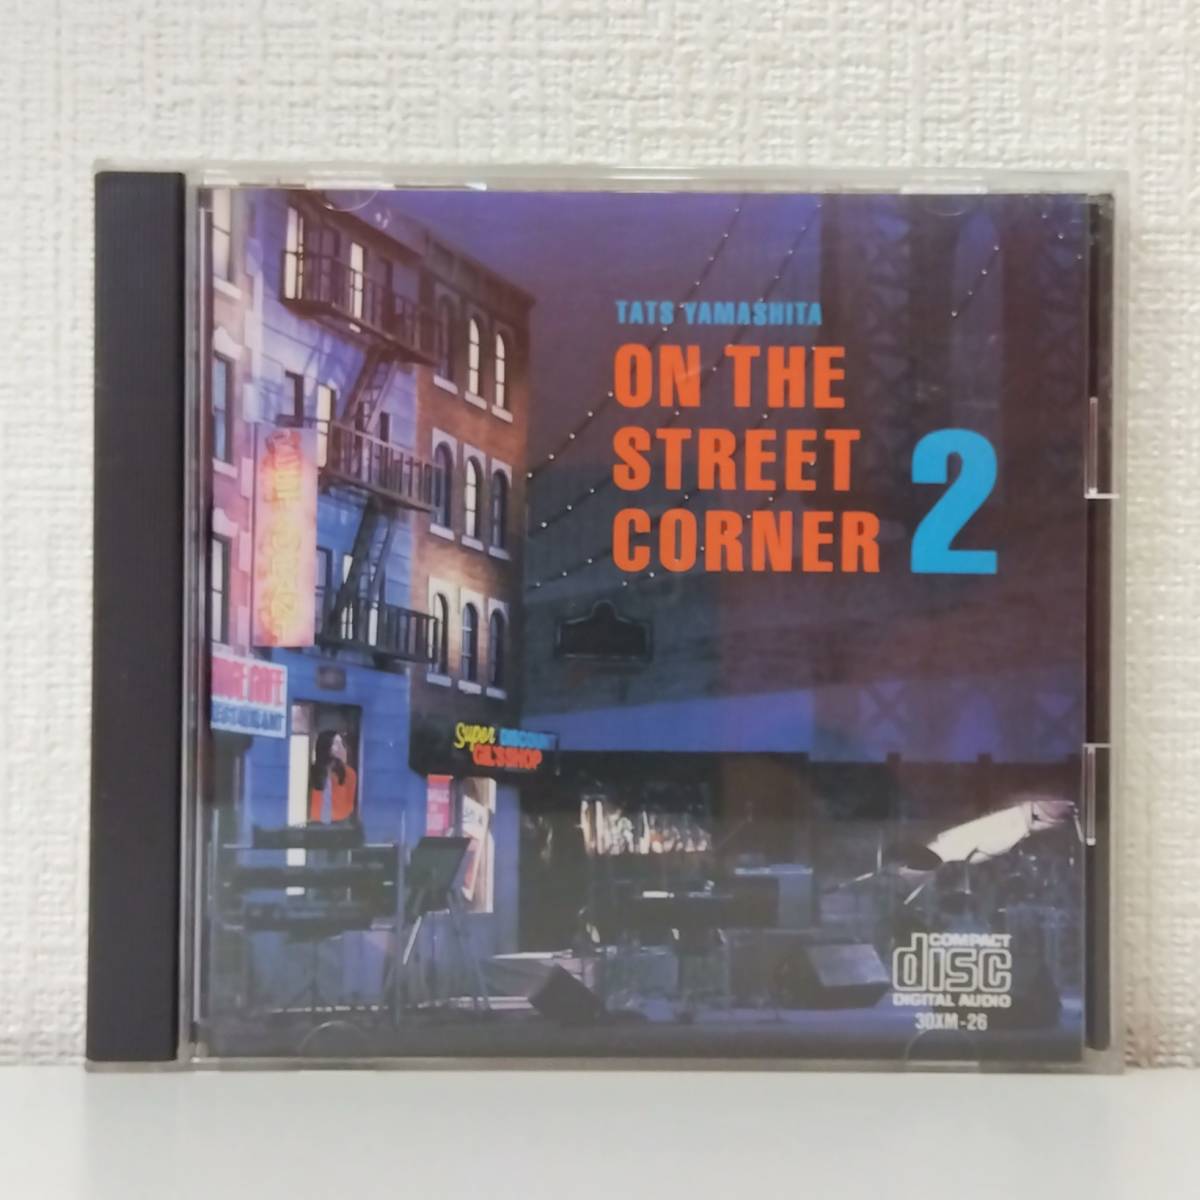 邦CD★山下達郎 ON THE STREET CORNER 2 初期盤 TATS YAMSASHITA 30XM-26_画像1